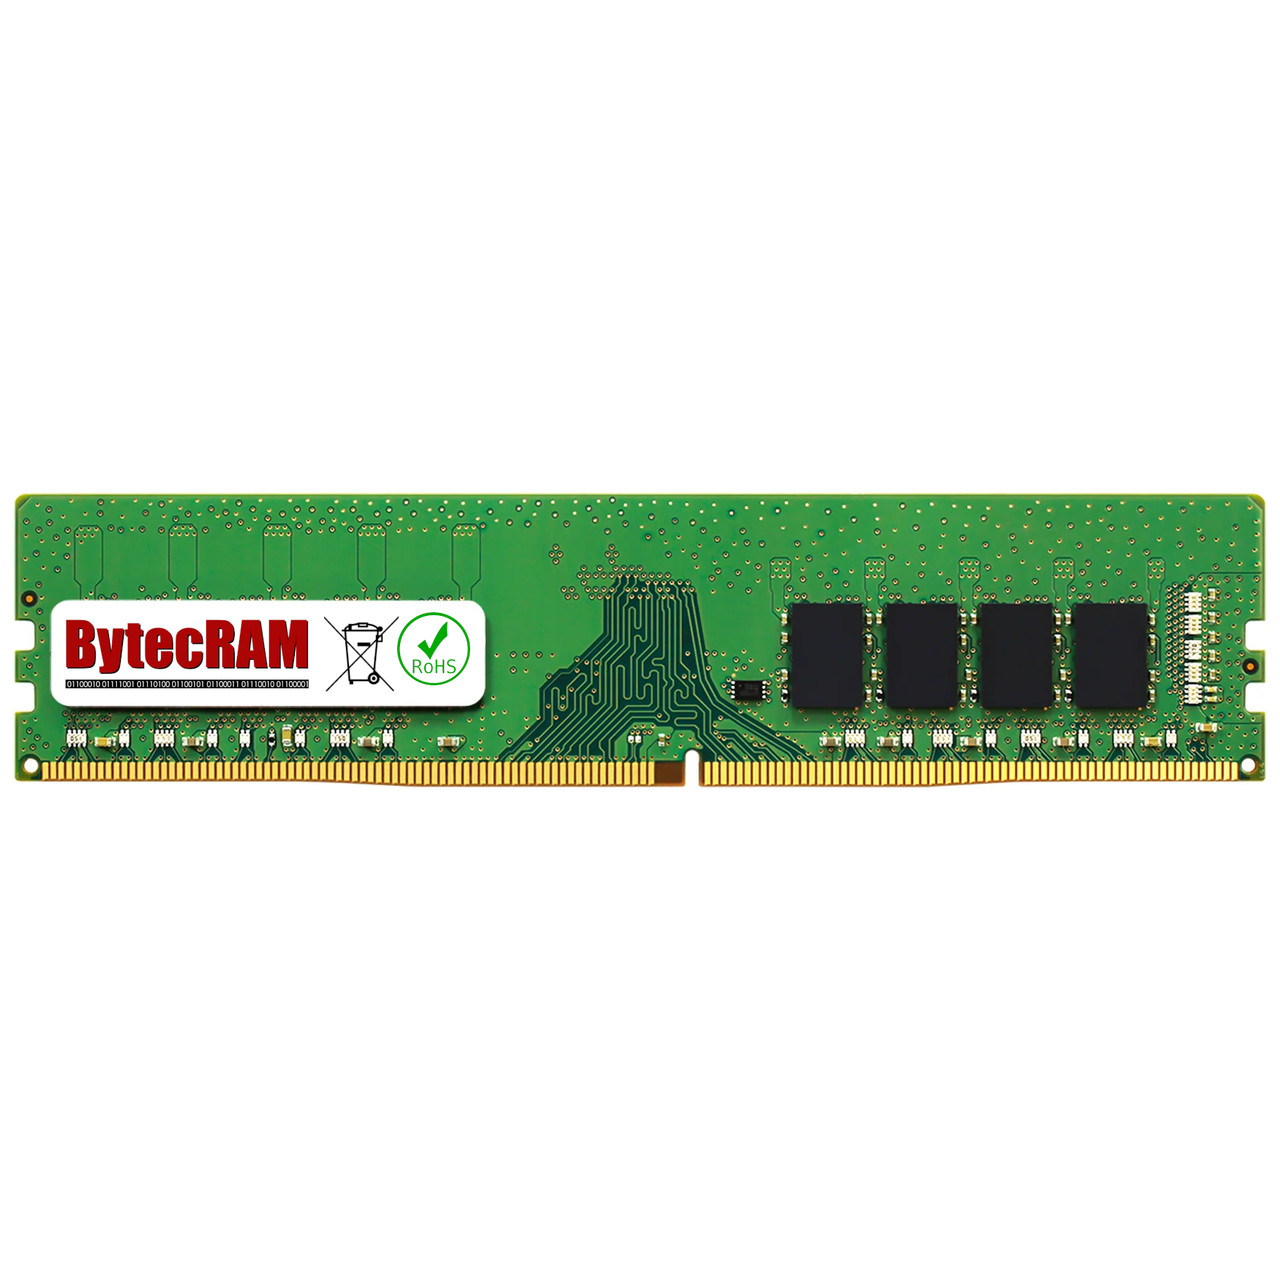 eBay*16GB Dell Vostro 3470 DDR4 2666MHz UDIMM Memory RAM Upgrade